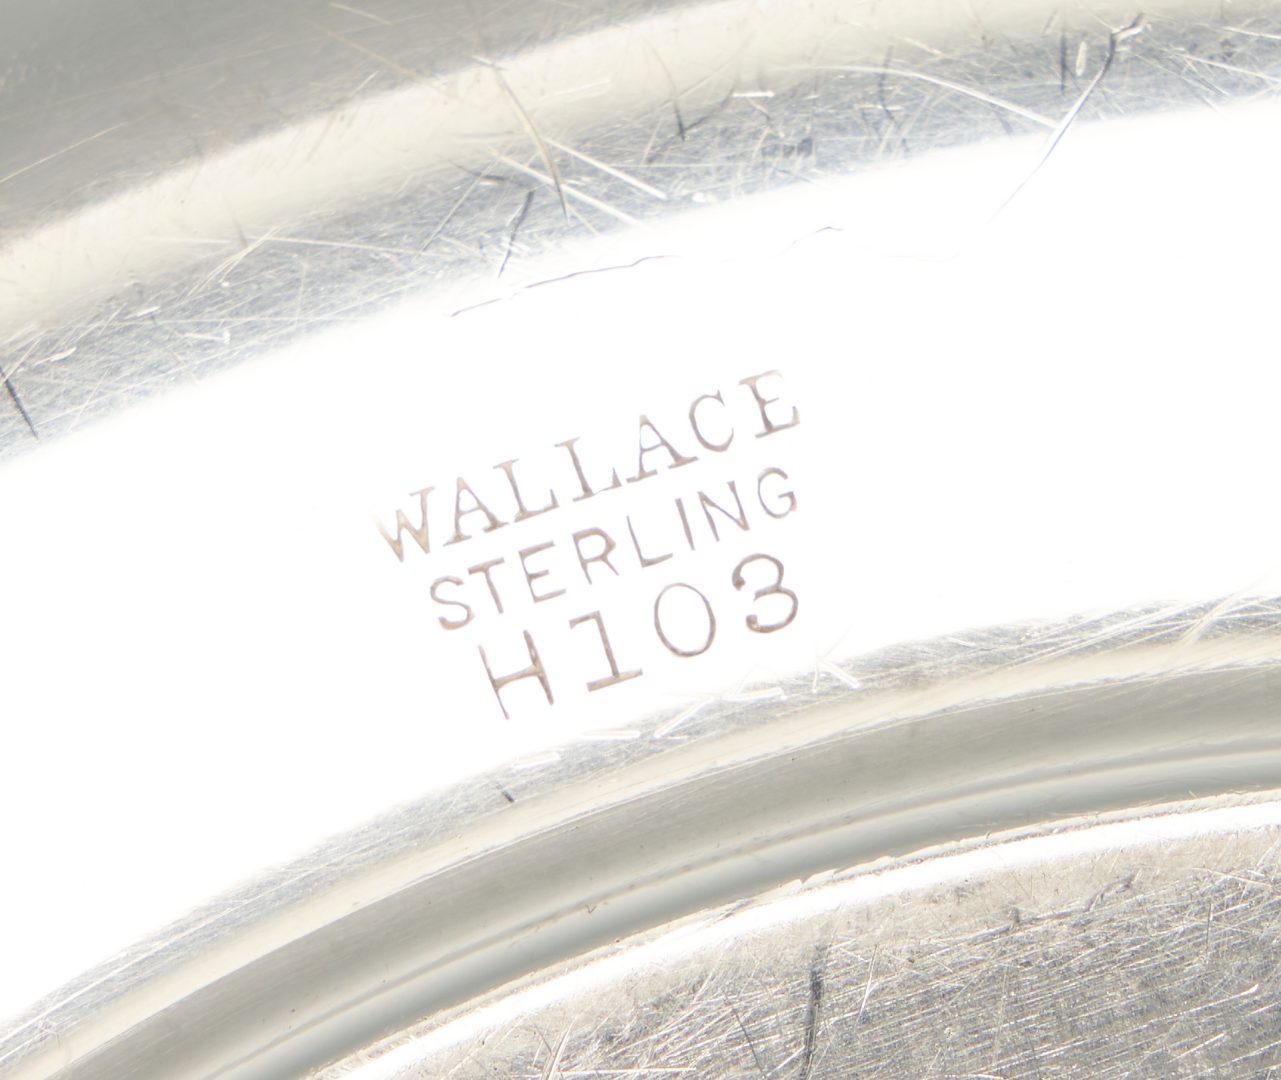 Lot 762: 5 Sterling Silver Hollowware Plates, incl. Wallace, International